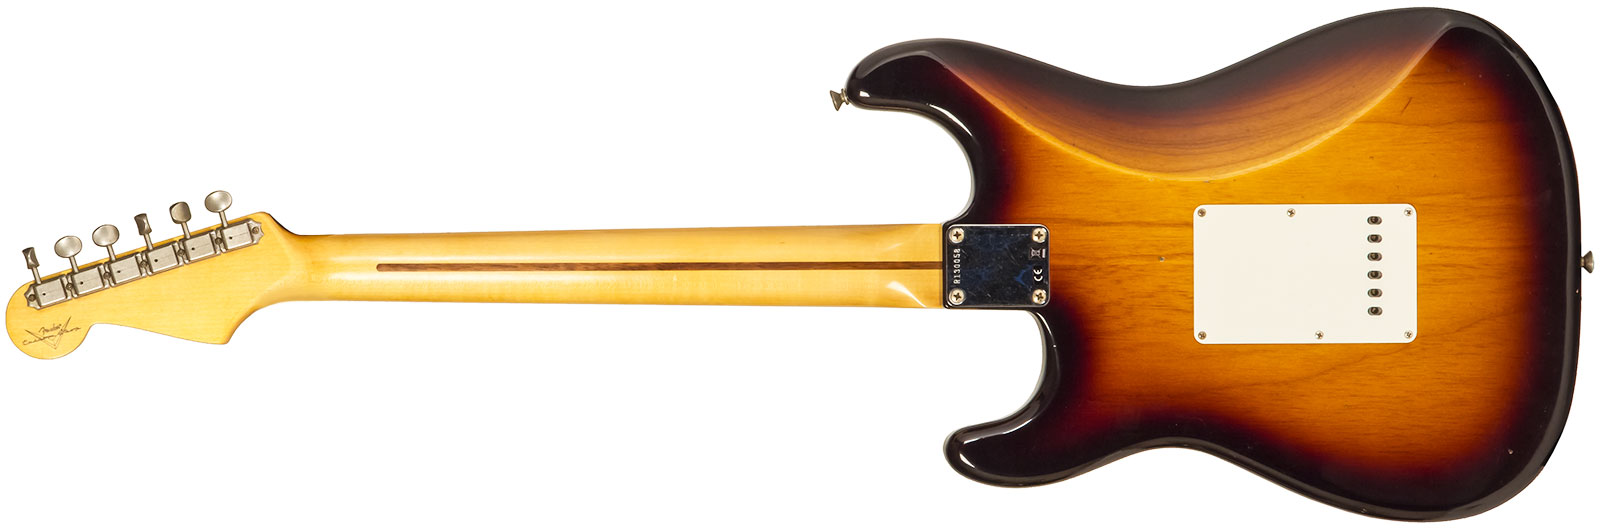 Fender Custom Shop Strat 1955 3s Trem Mn #r130058 - Journeyman Relic 2-color Sunburst - Elektrische gitaar in Str-vorm - Variation 2